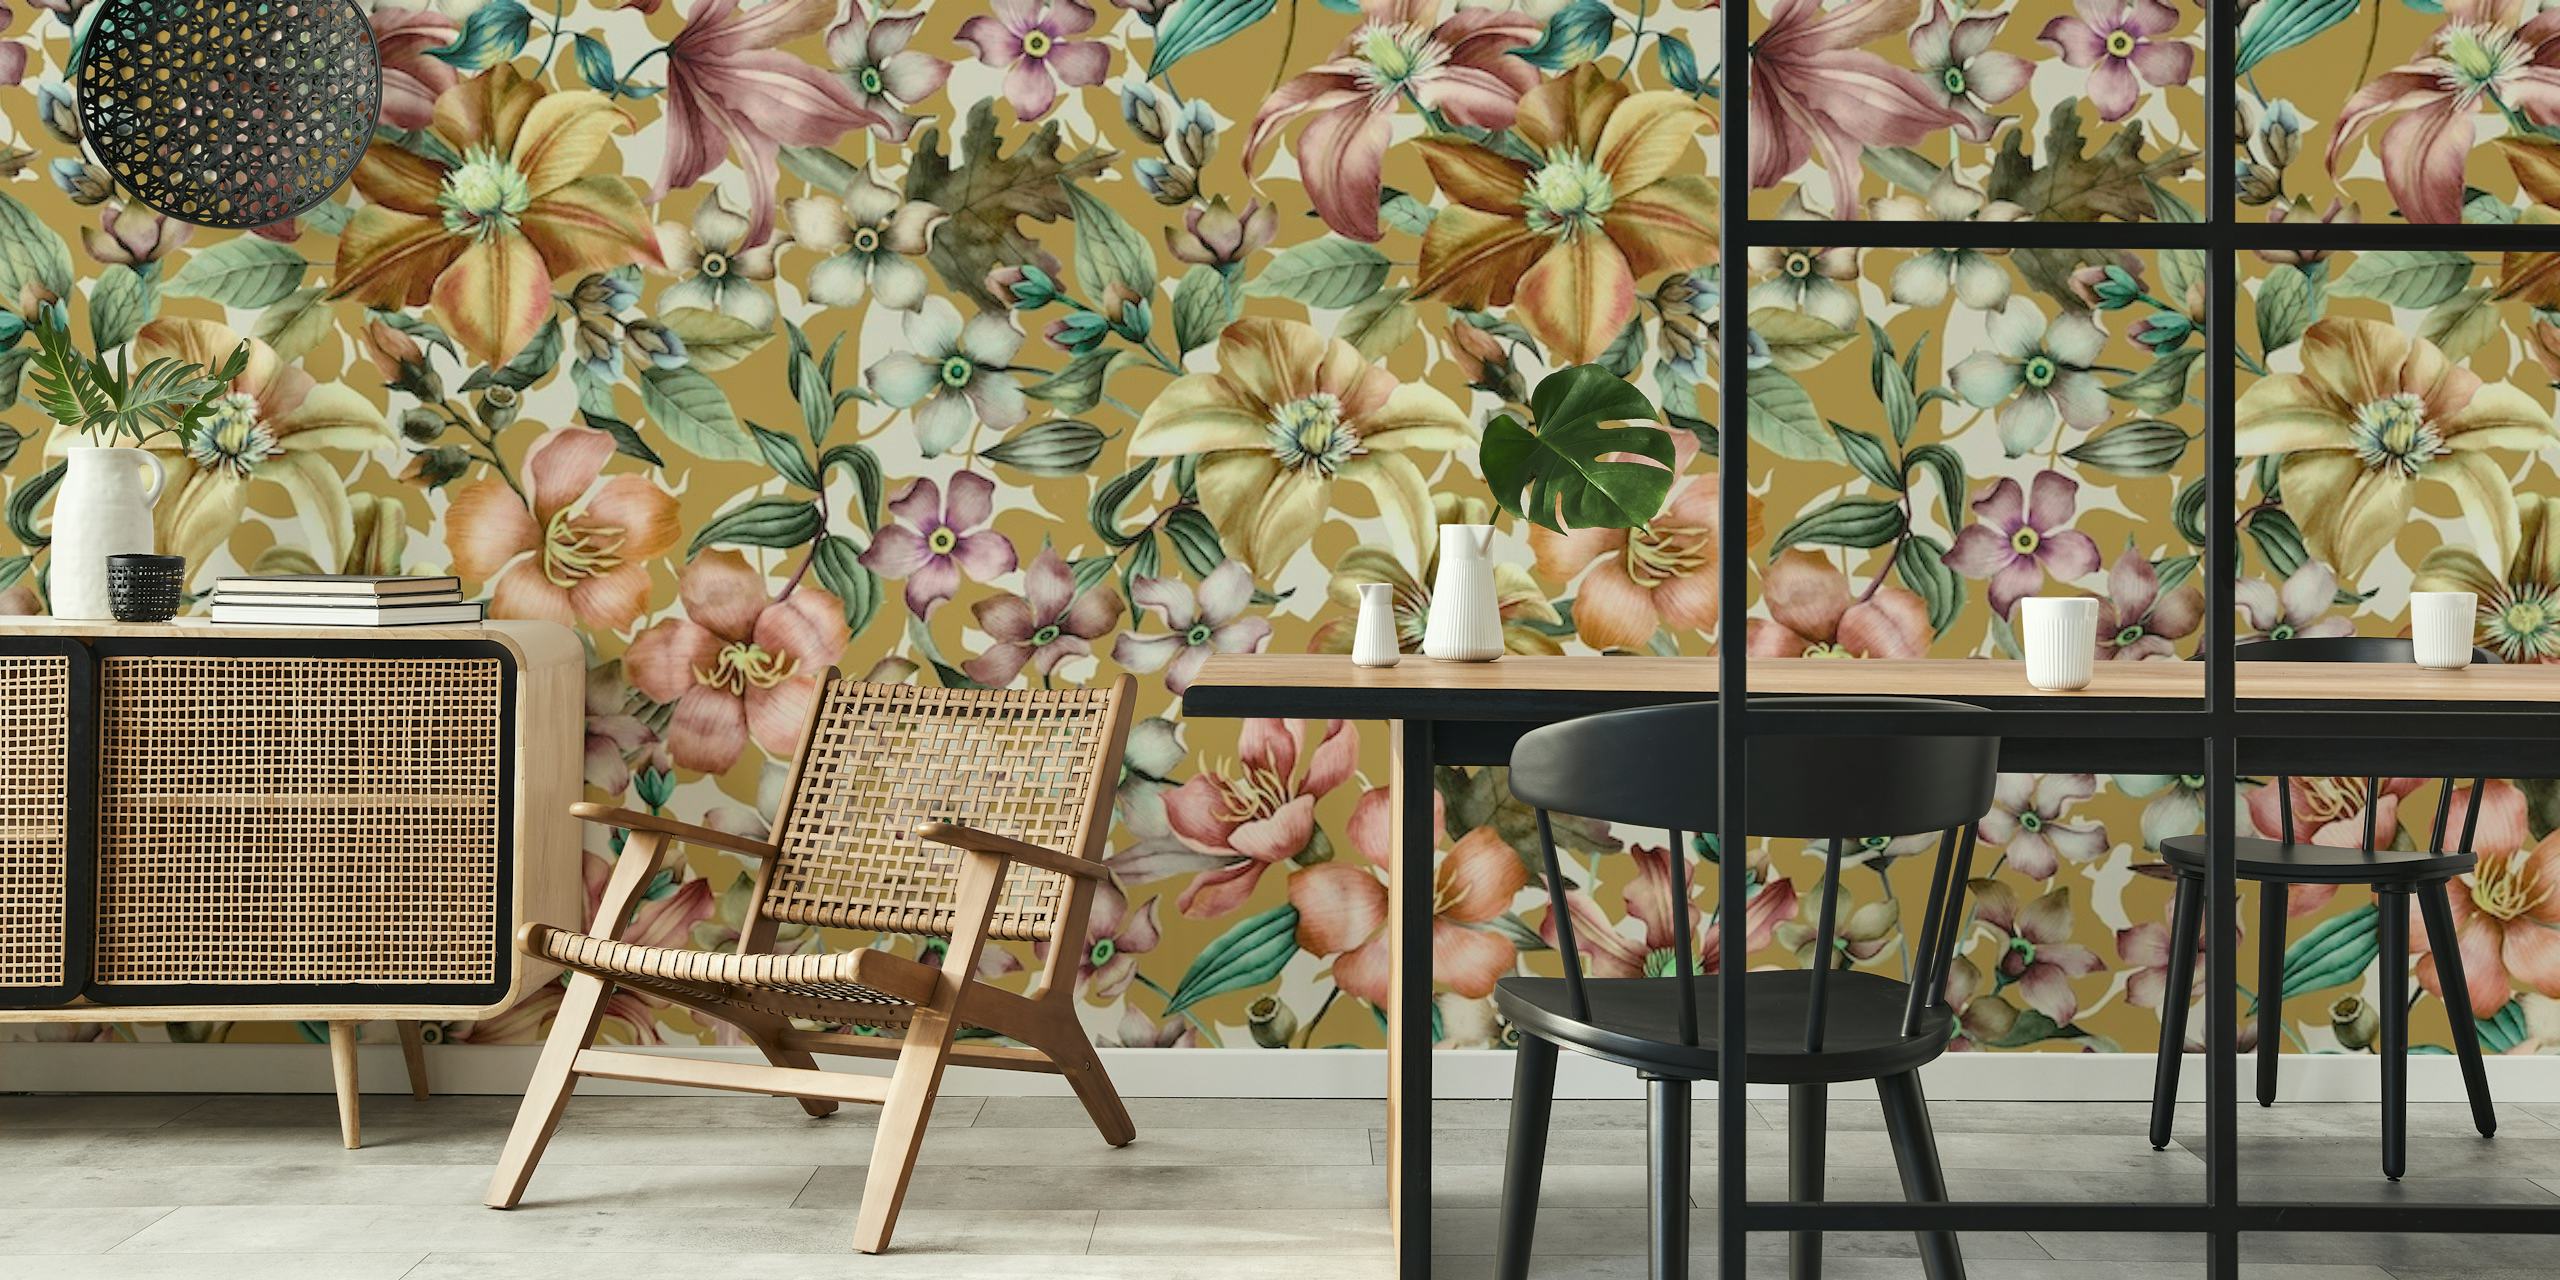 Murale da giardino vintage drammatico con motivi floreali